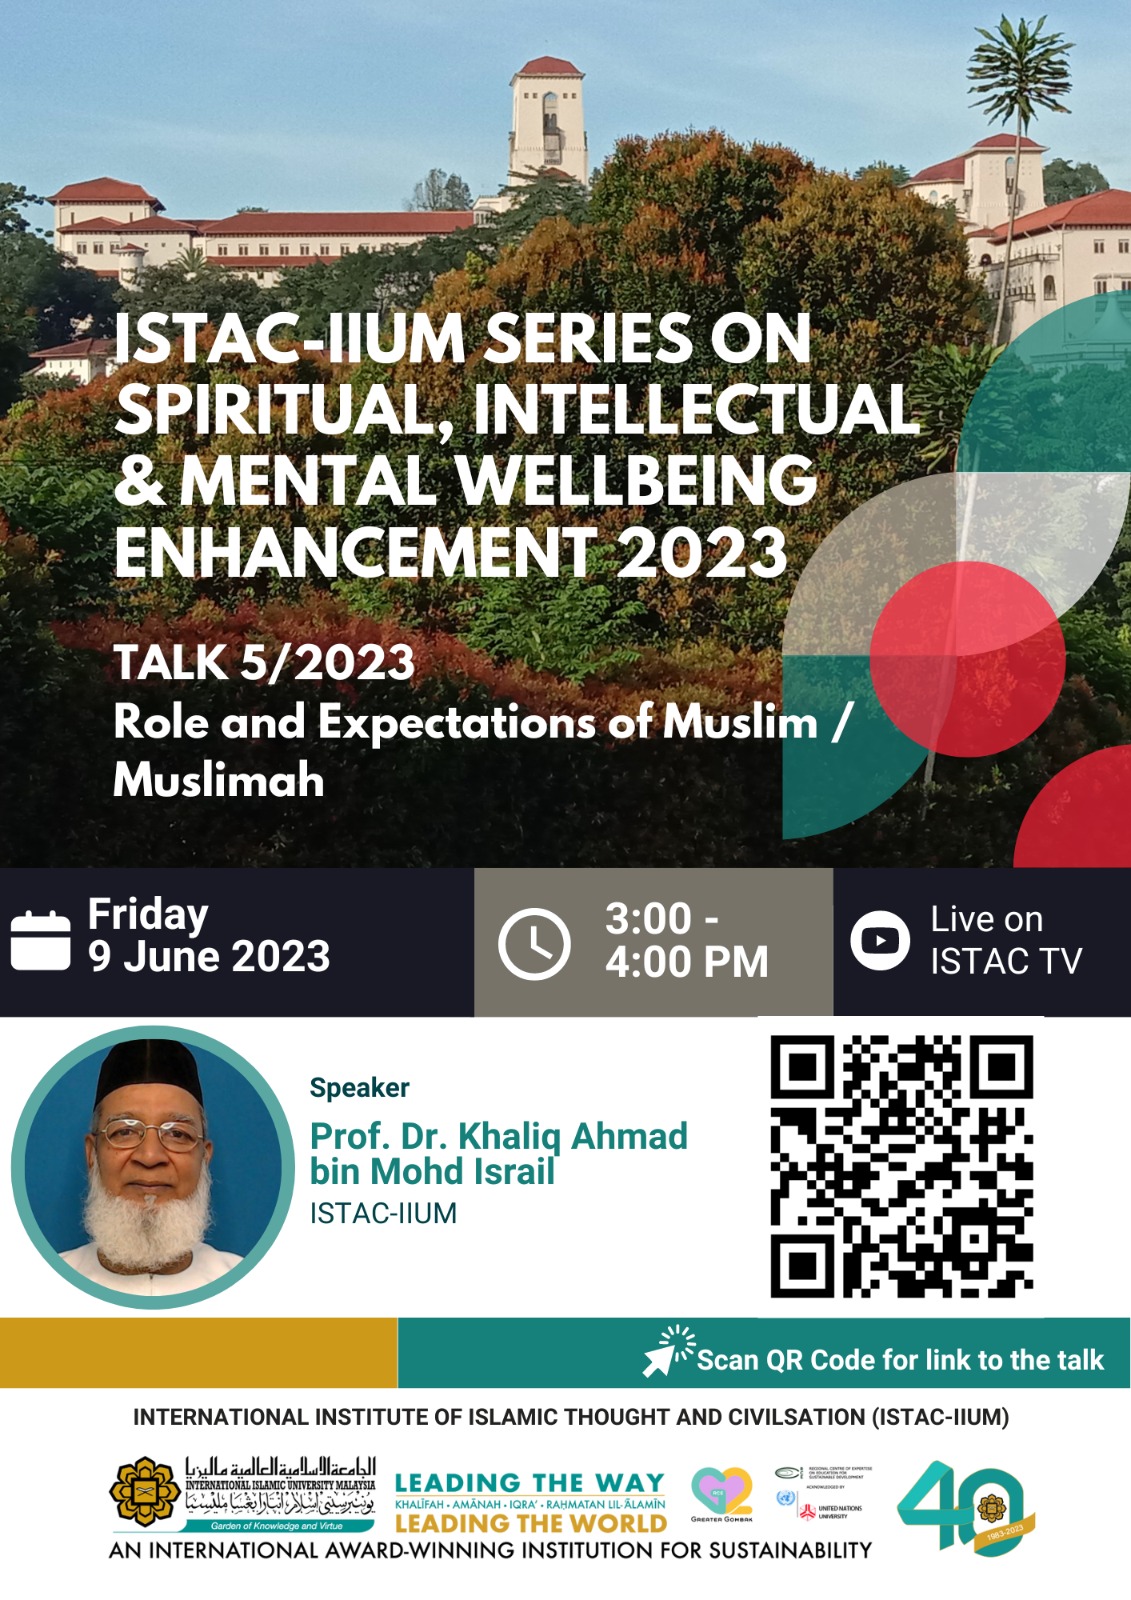 ISTAC-IIUM SERIES ON SPIRITUAL, INTELLECTUAL & MENTAL WELLBEING ENHANCEMENT 2023 - TALK 5/2023